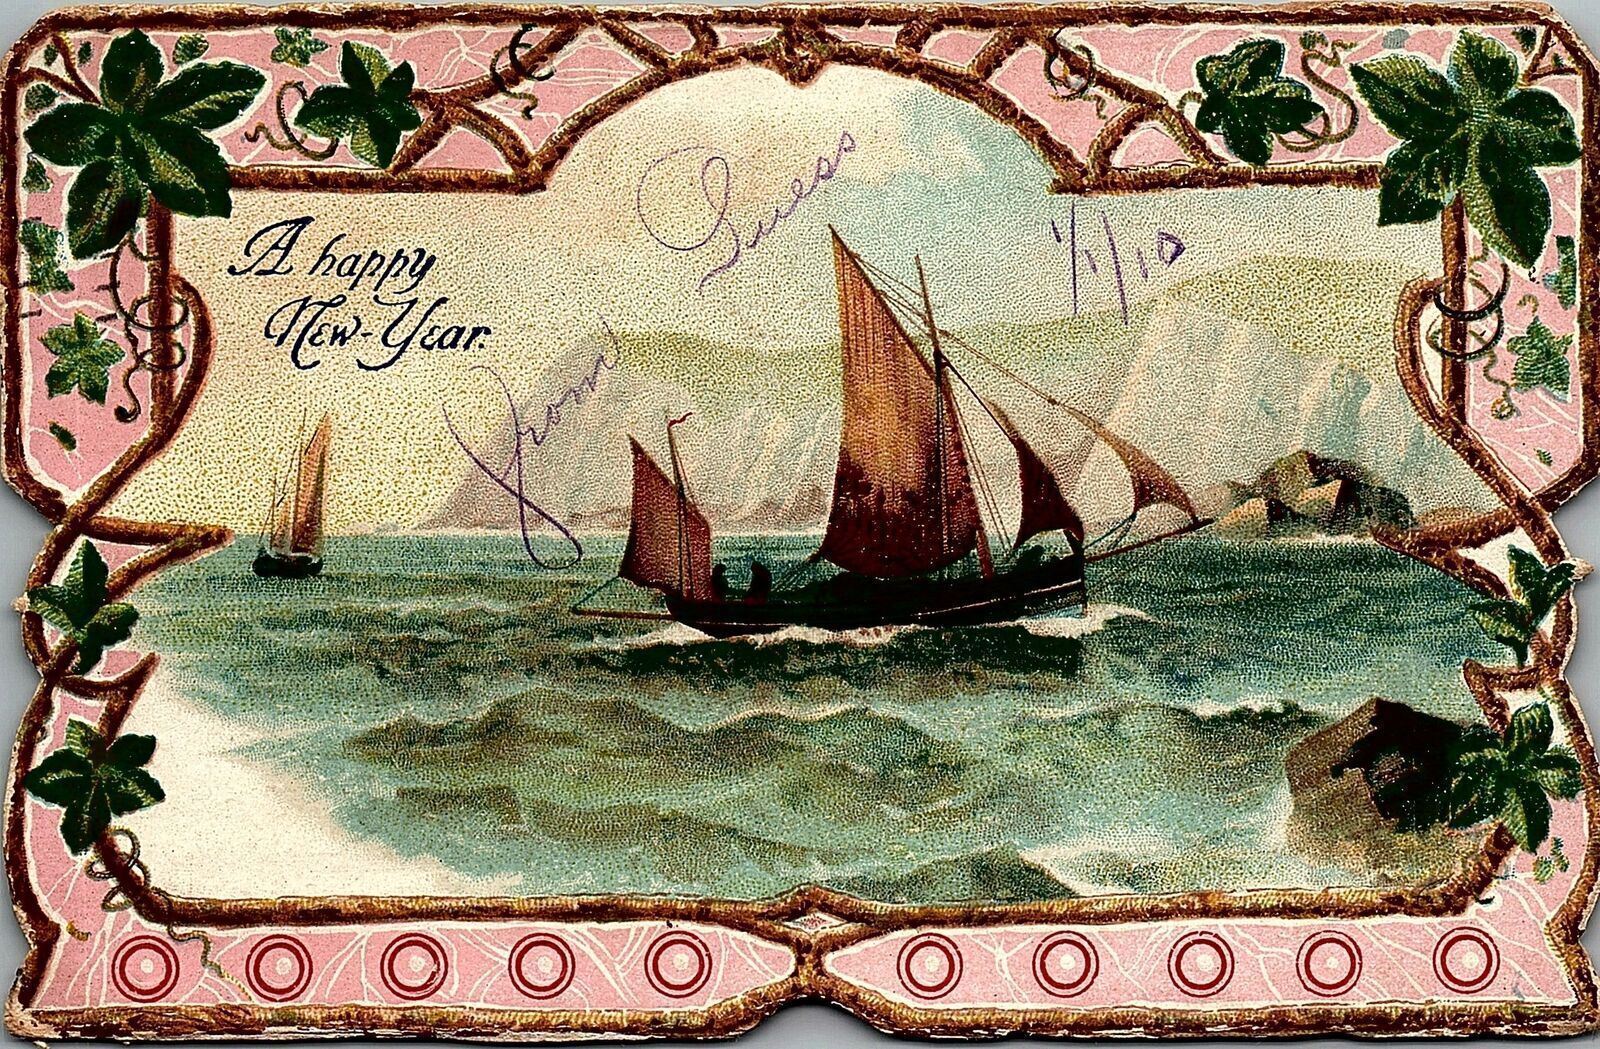 1909 HAPPY NEW YEAR DIE CUT SAILING SHIPS BUFFALO NEW YORK POSTCARD 36-232